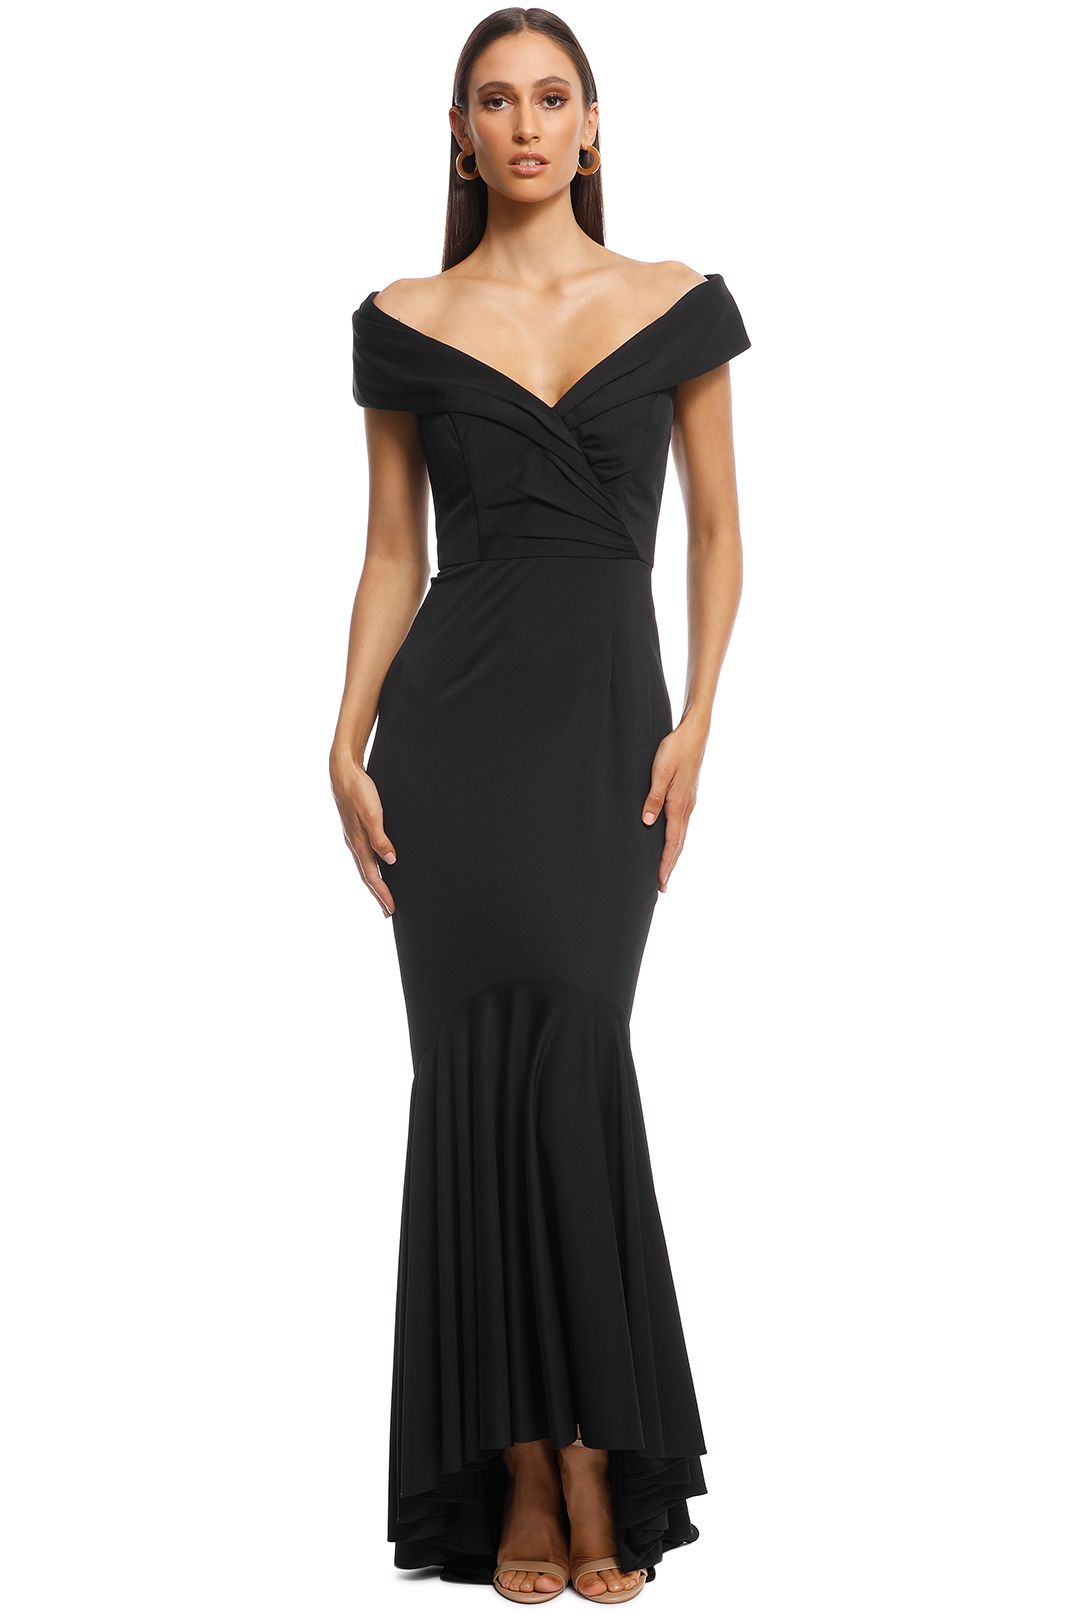 Elyse Gown in Black by Jadore for Rent | GlamCorner